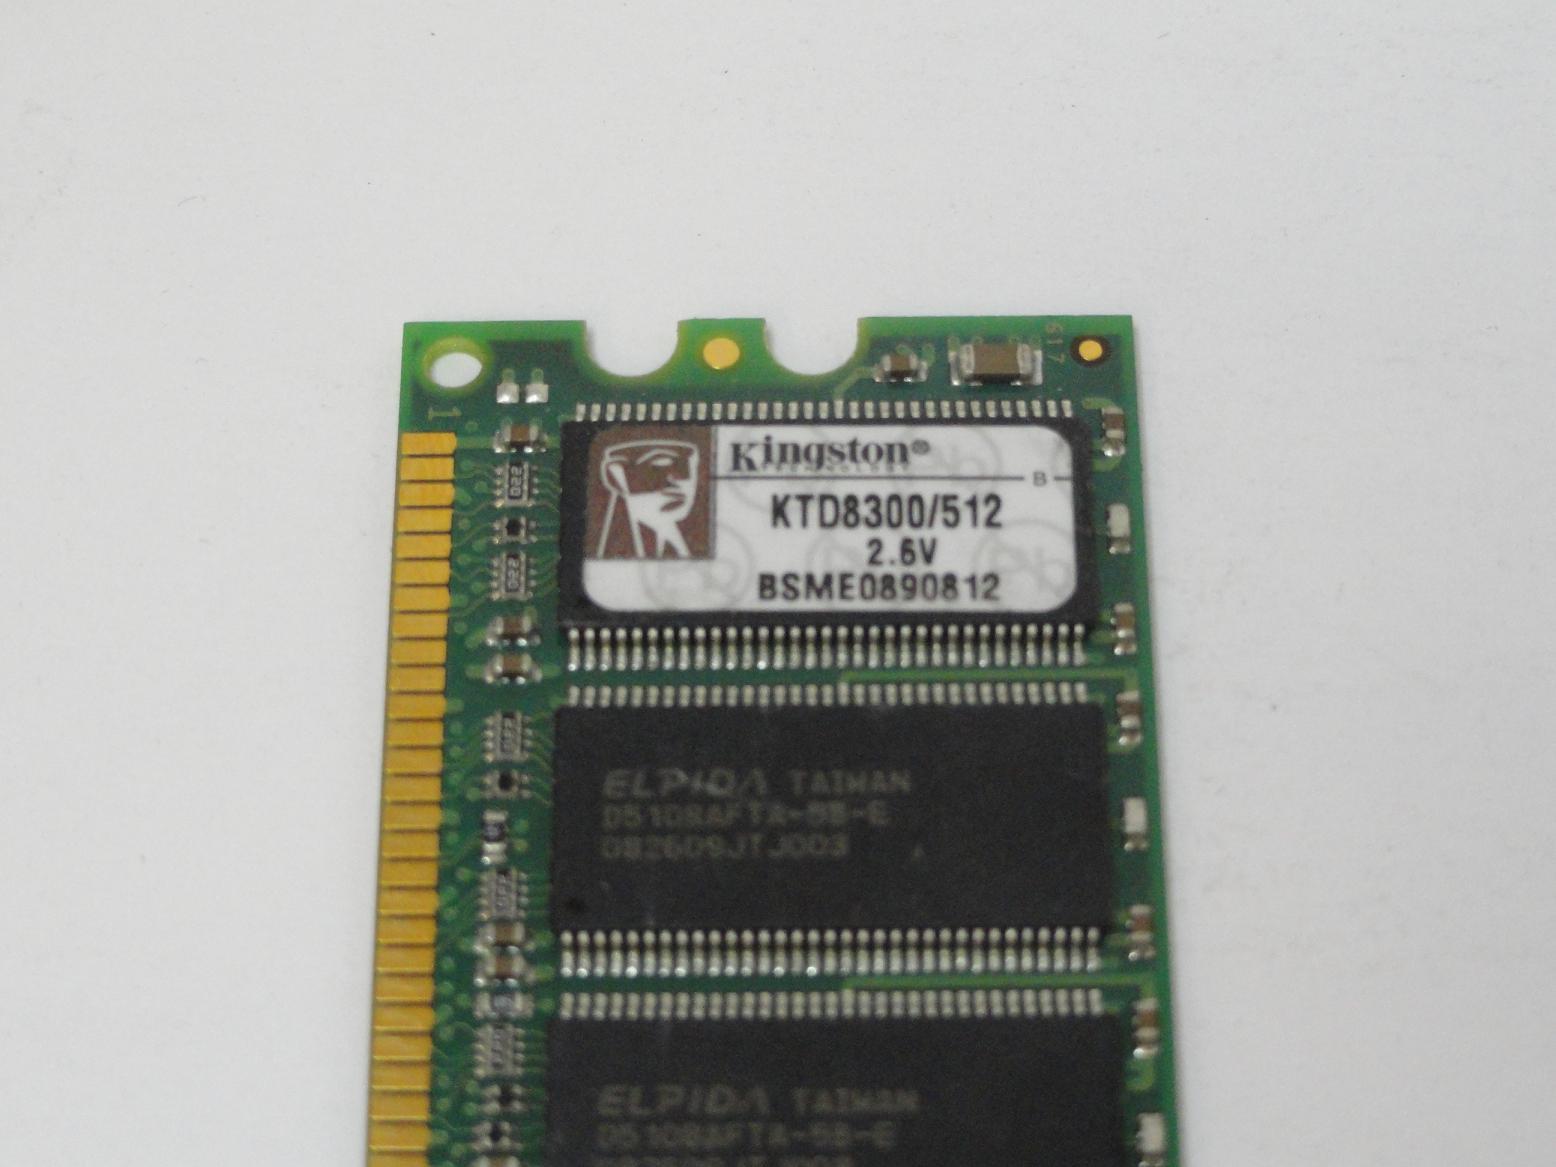 PR25362_9905192-091.A00LF_Kingston 512MB PC3200 DDR-400MHz DIMM RAM - Image4